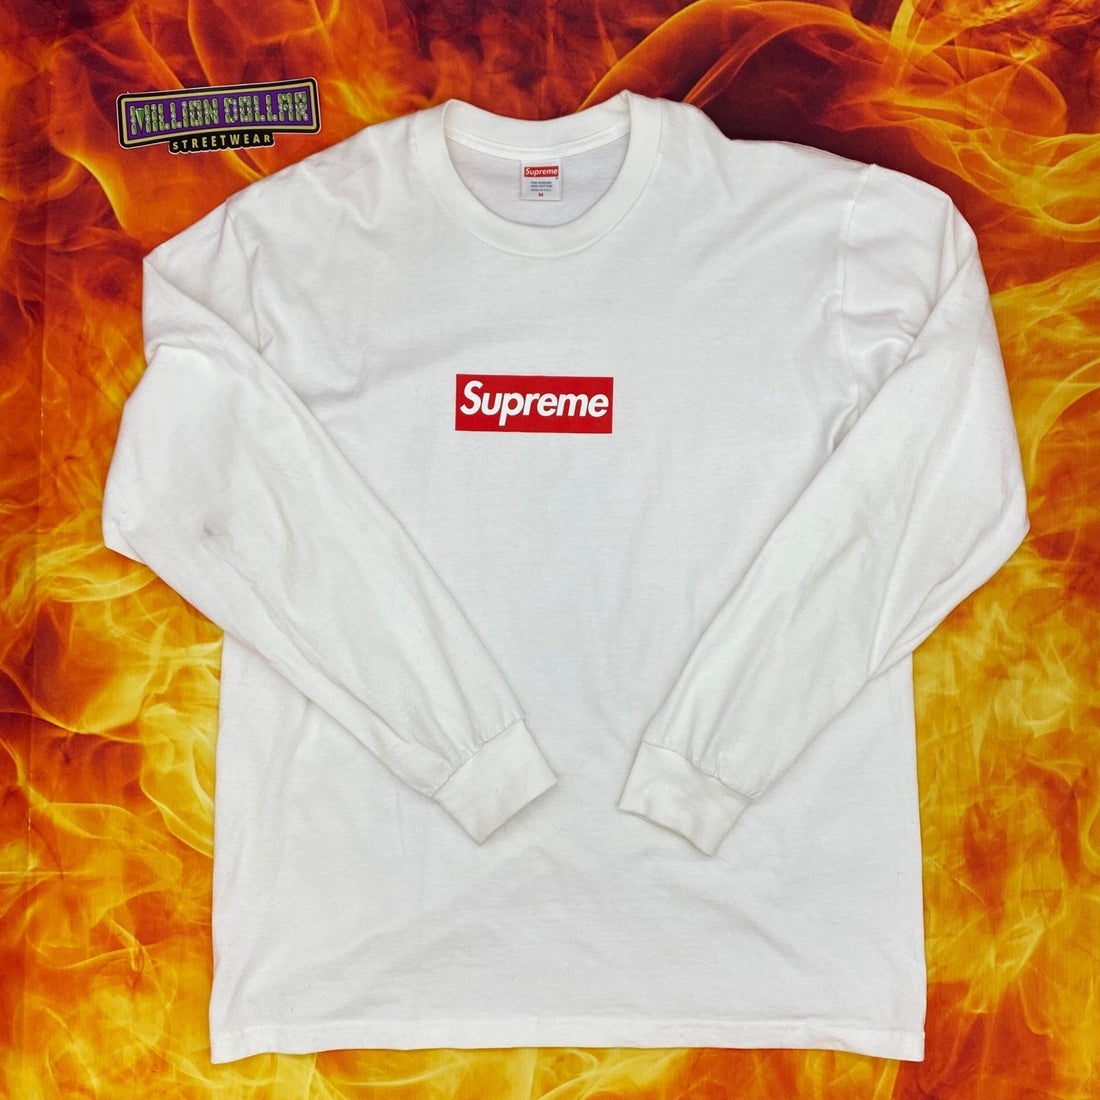 Supreme Box Logo Long Sleeve T-Shirt